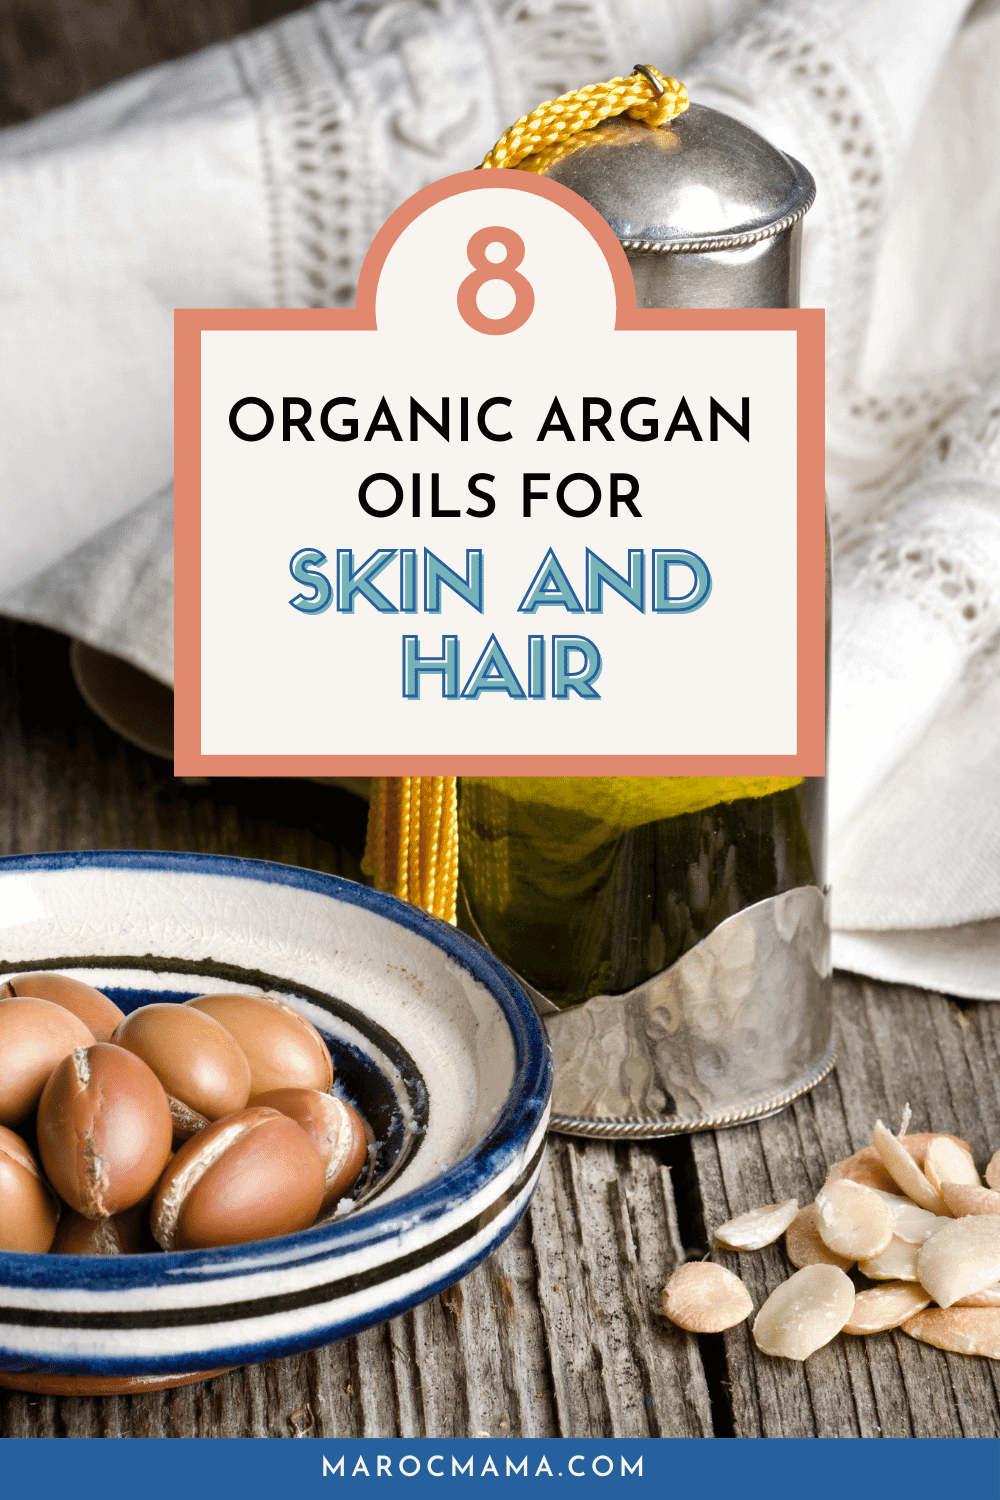 8 Organic Argan Oils For Your Hair and Skin - MarocMama